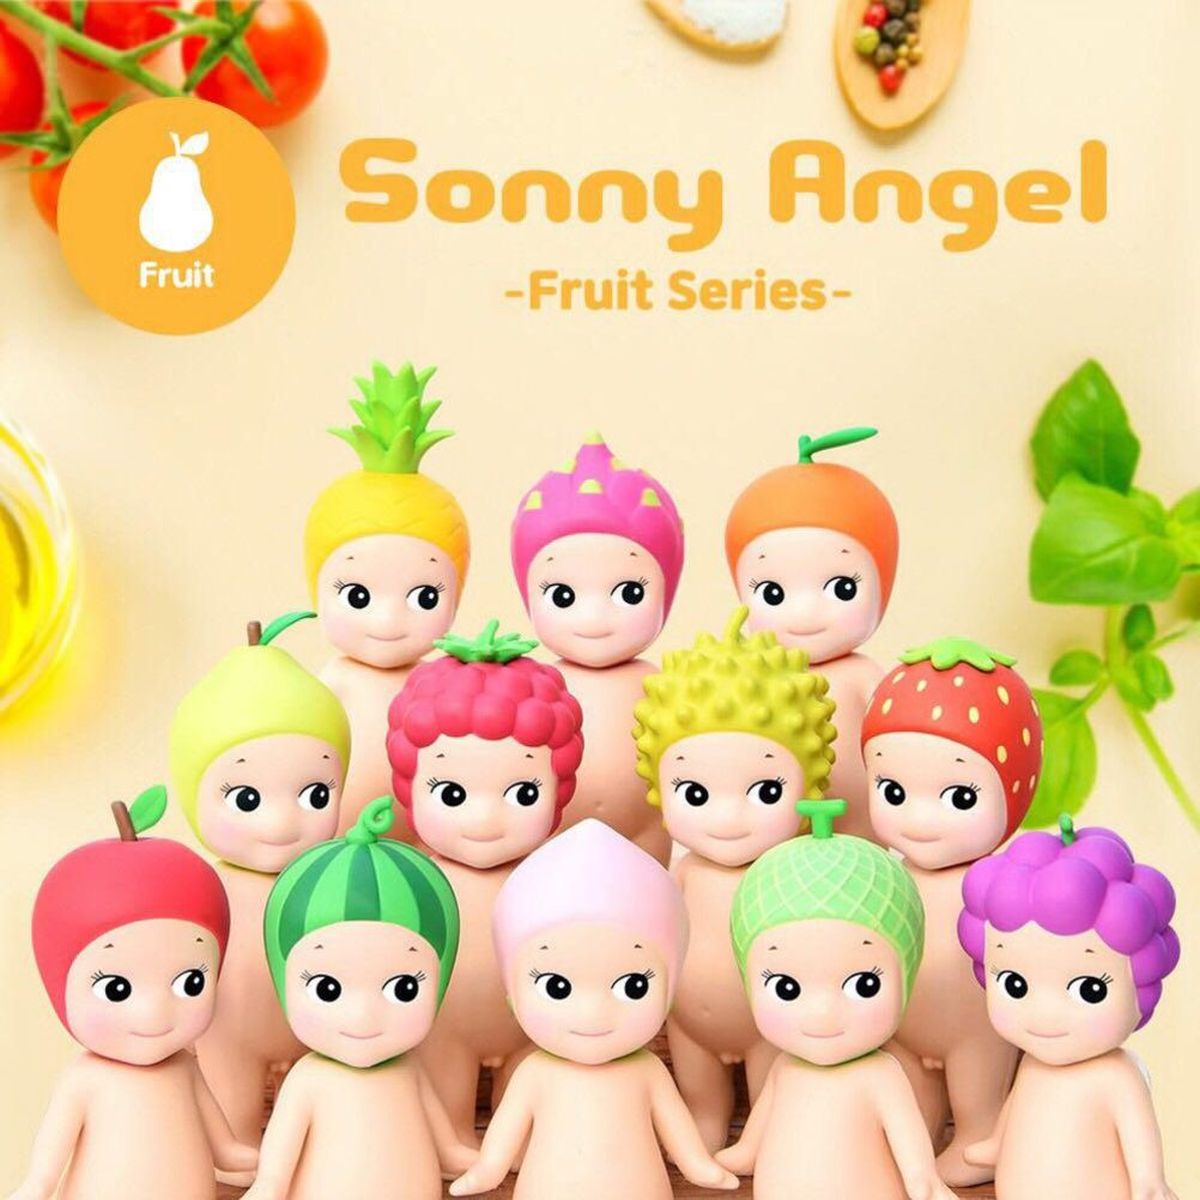 A Sonny Angel Figurine Fruits Series 2019